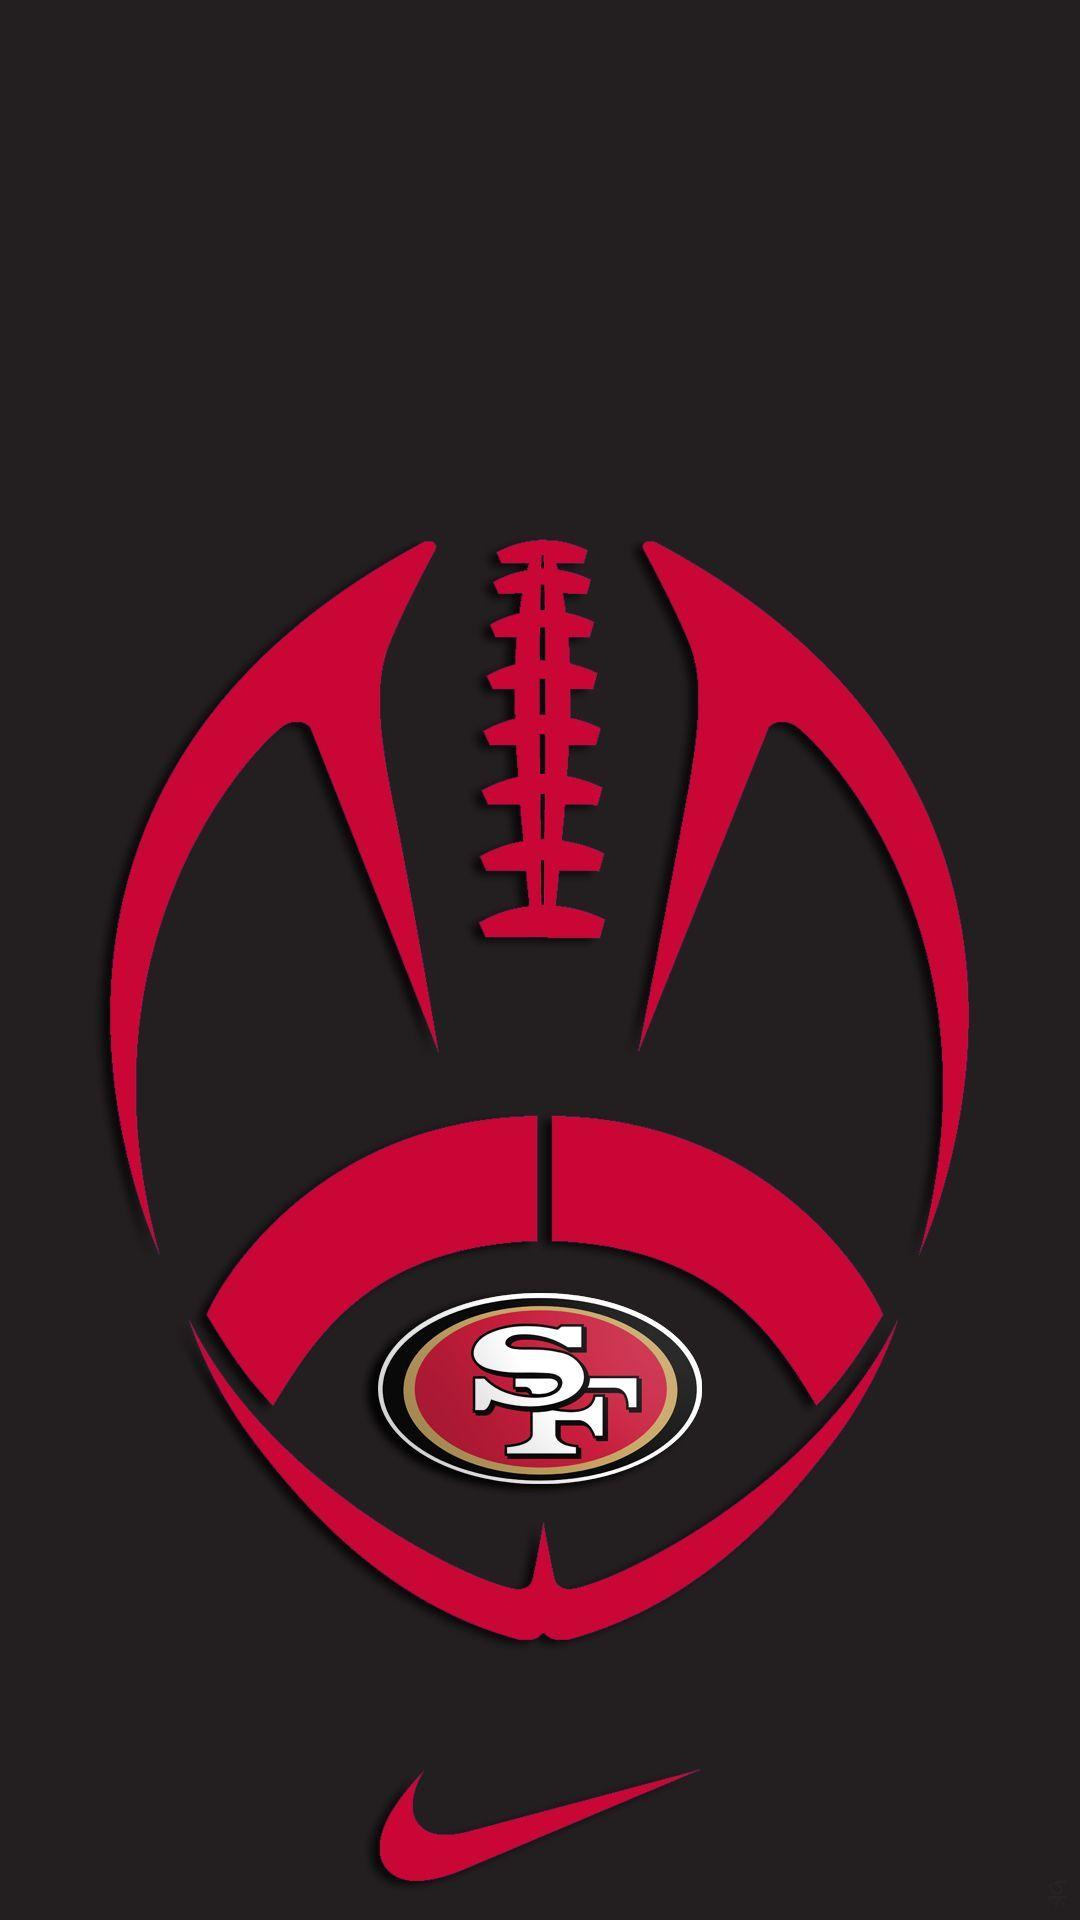 NFL 49ers Logo - Next yearers. Football, NFL, Sf niners